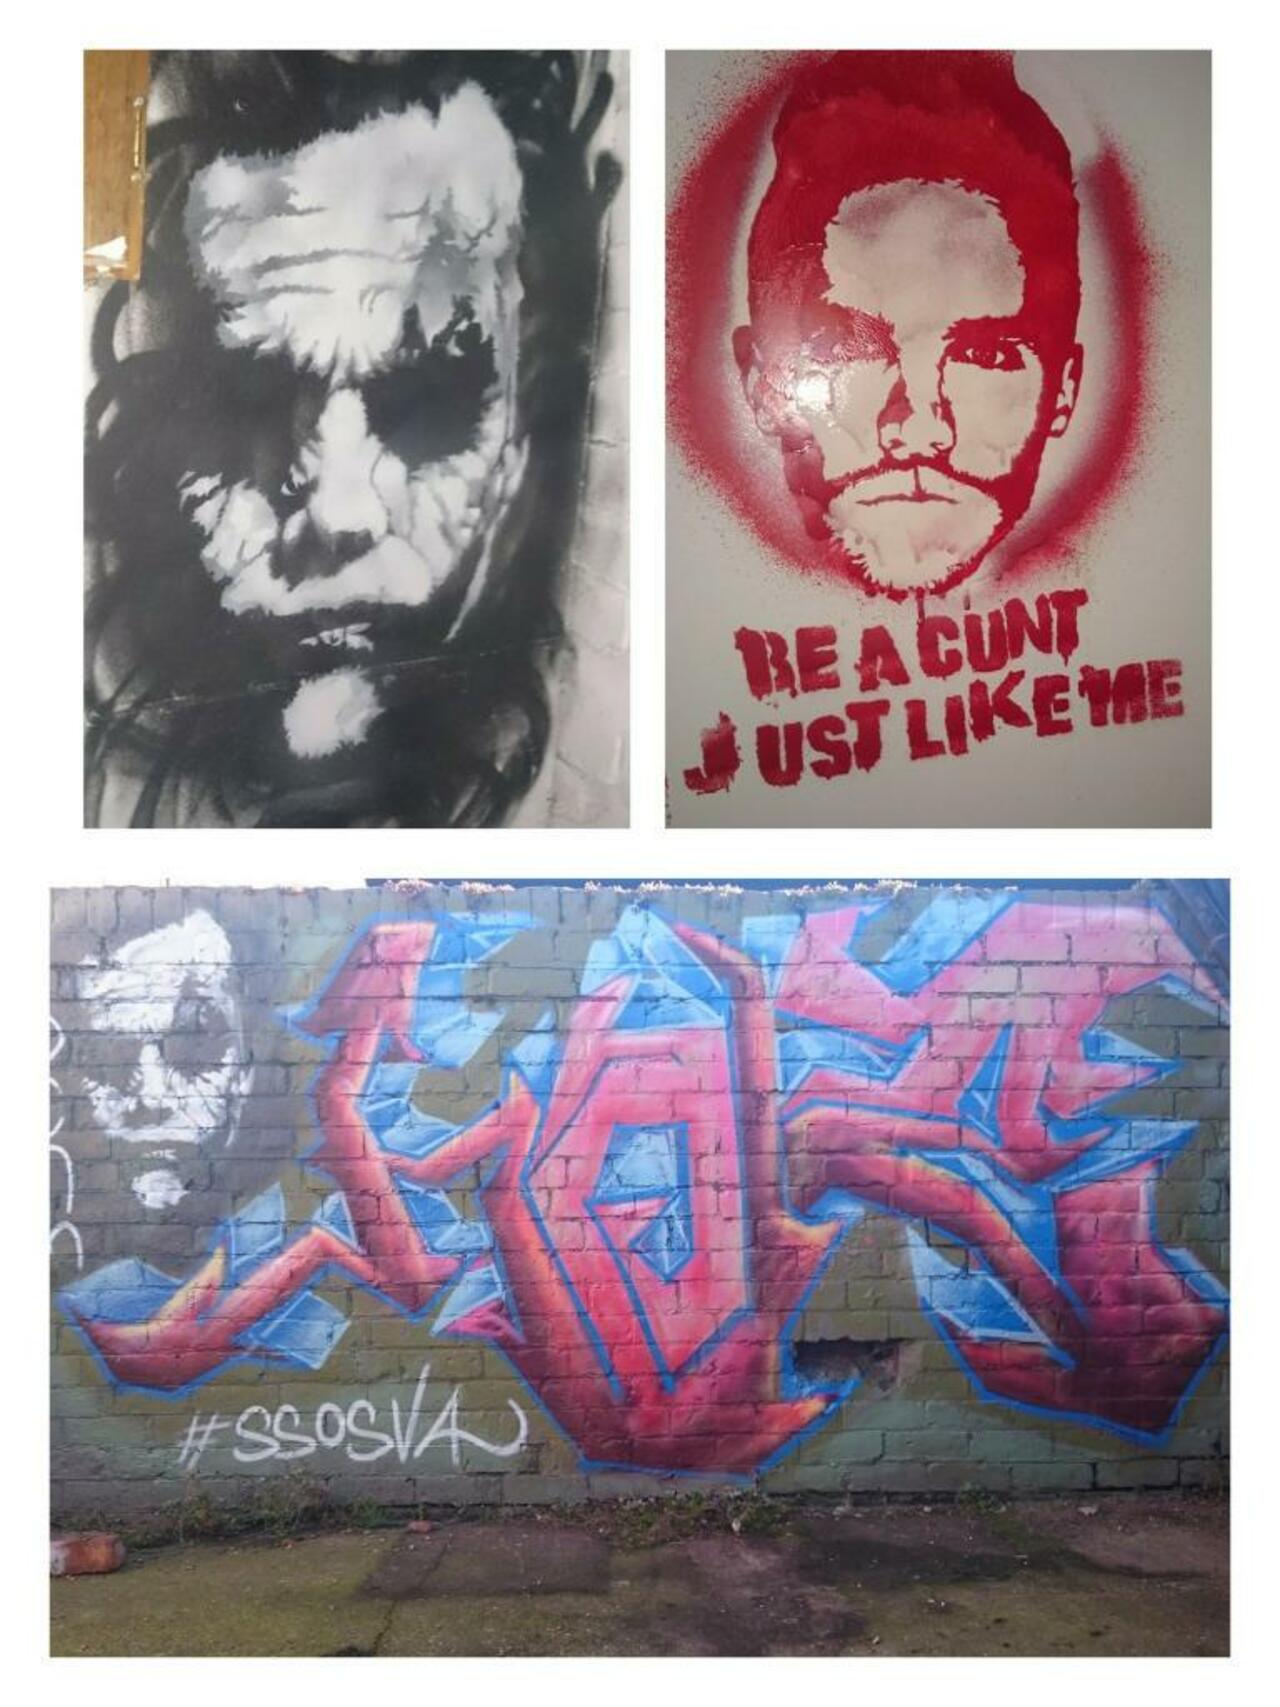 All in a days work #stencil #graffiti #streetart #joker #TheJoker #batman #GeordieShore #graff #gazbeadle #artist http://t.co/fEipWAclQC